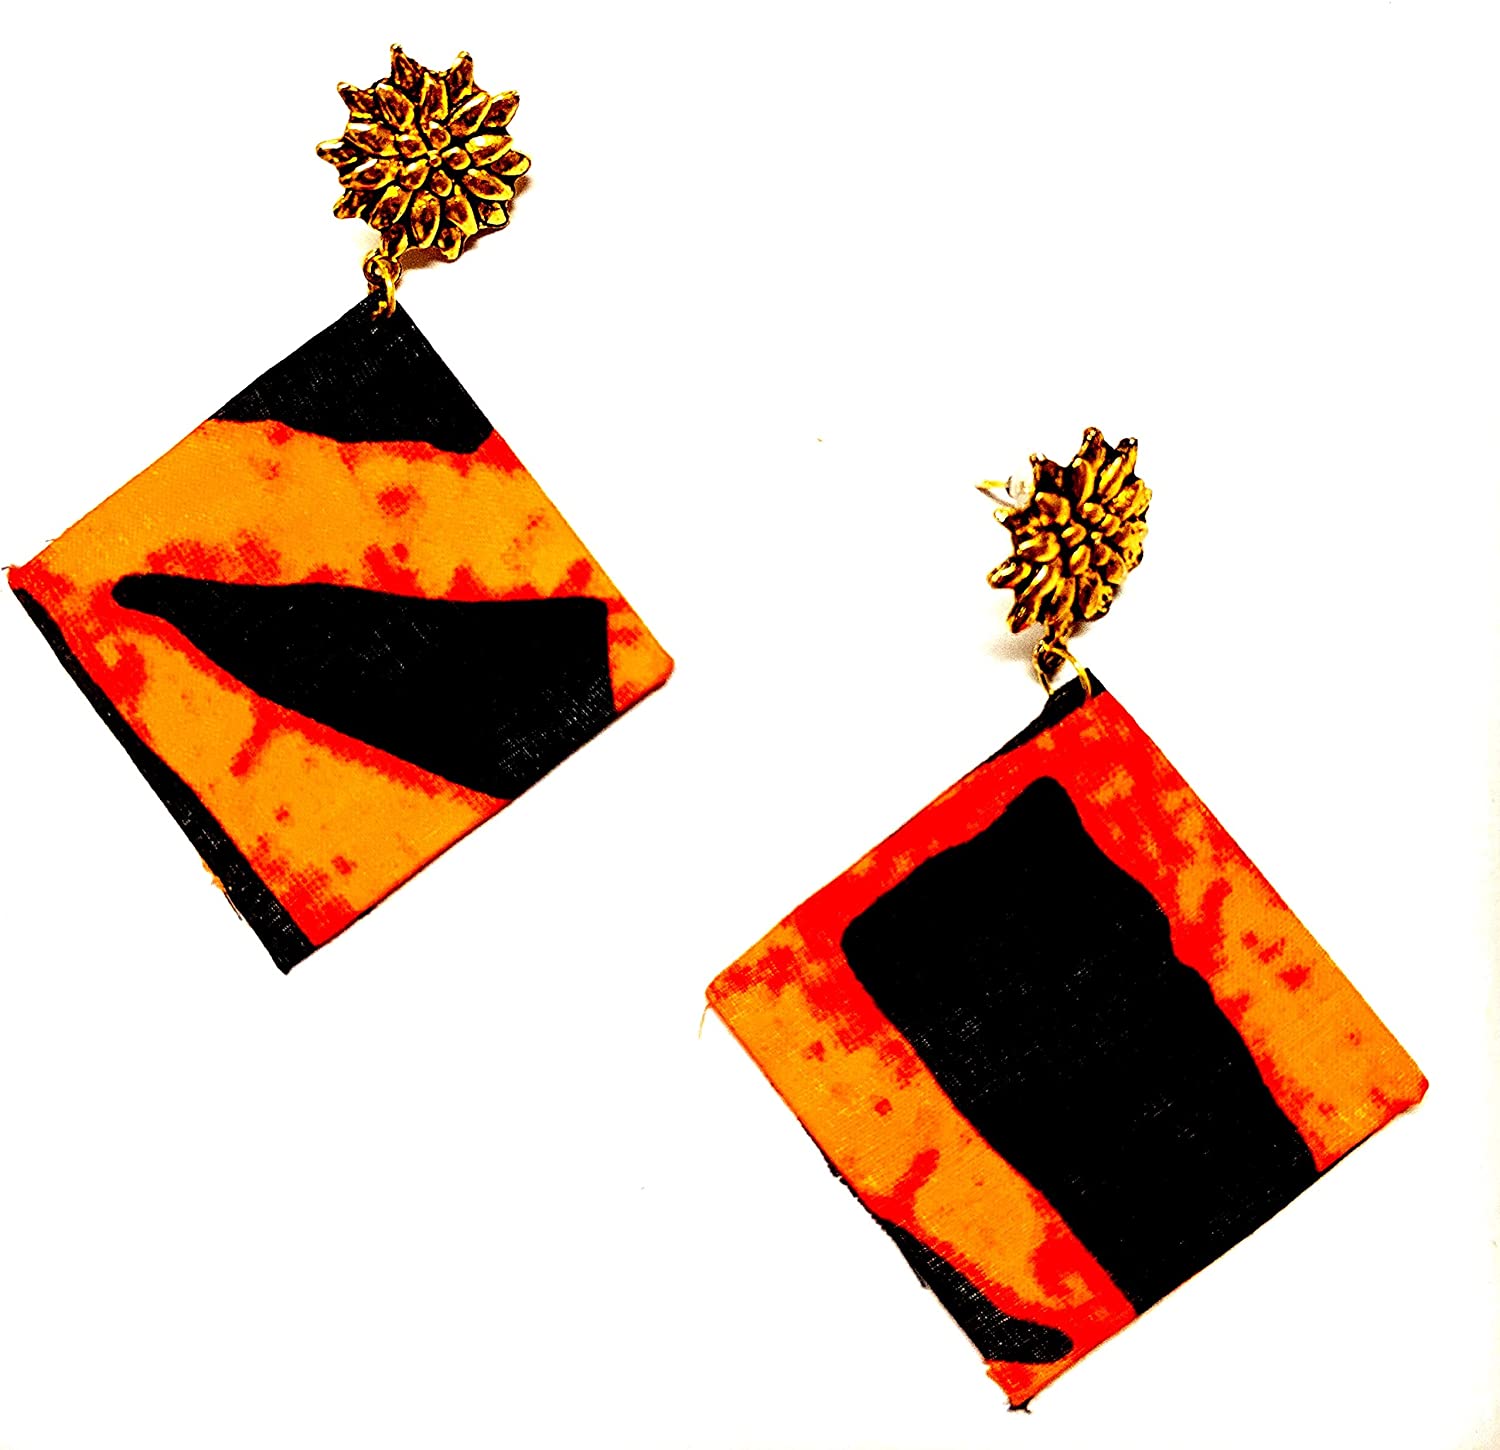 Detec Homzë Designer Printed Orange & Black Printed Earrings